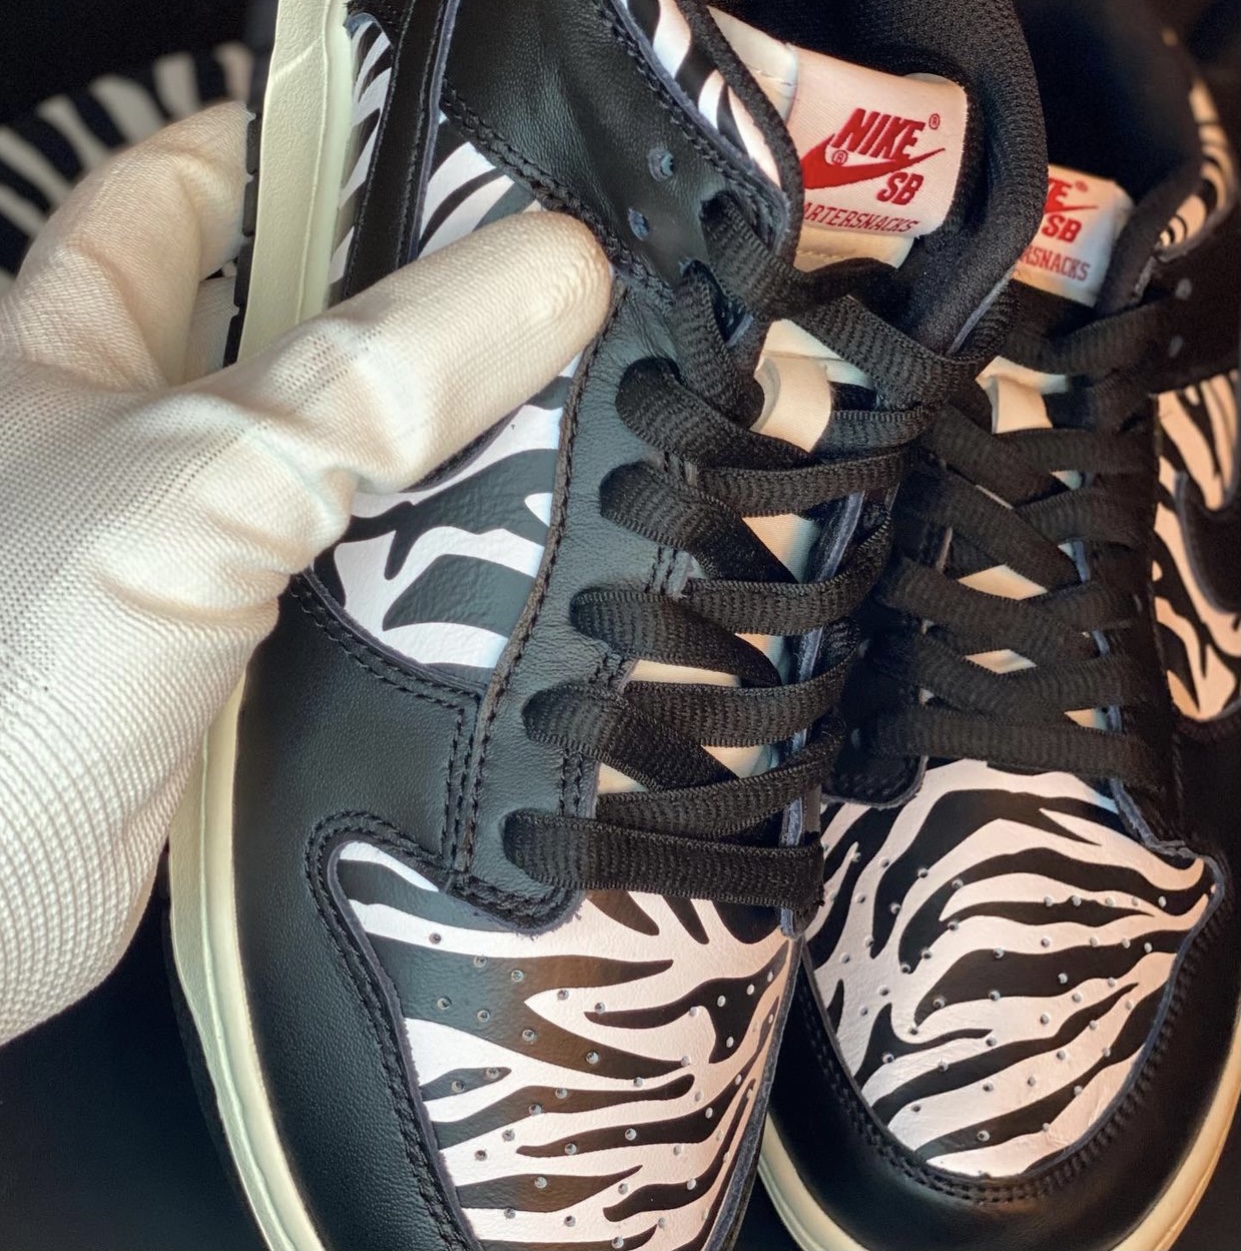 Quartersnacks Nike SB Dunk Low Zebra 2021 Release Date Price